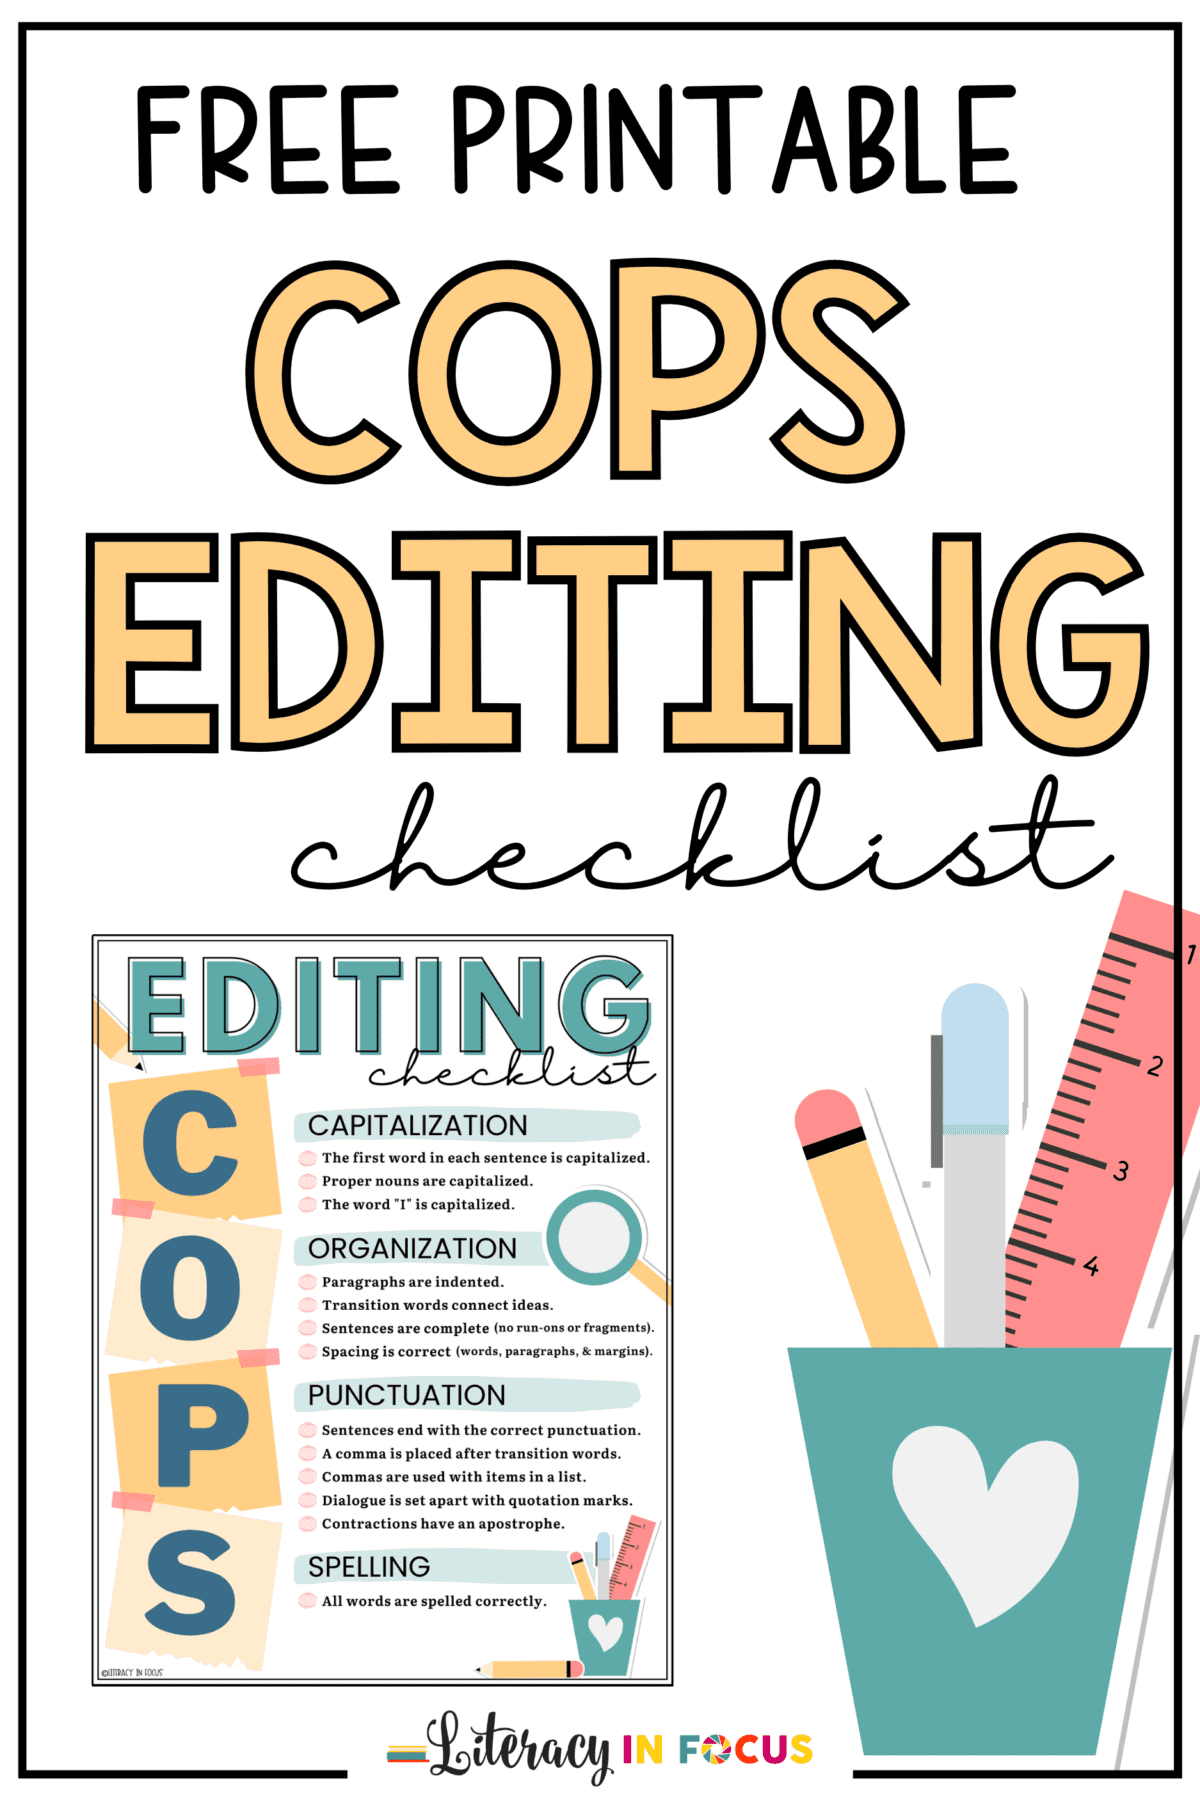 Free Printable Cops Checklist Template